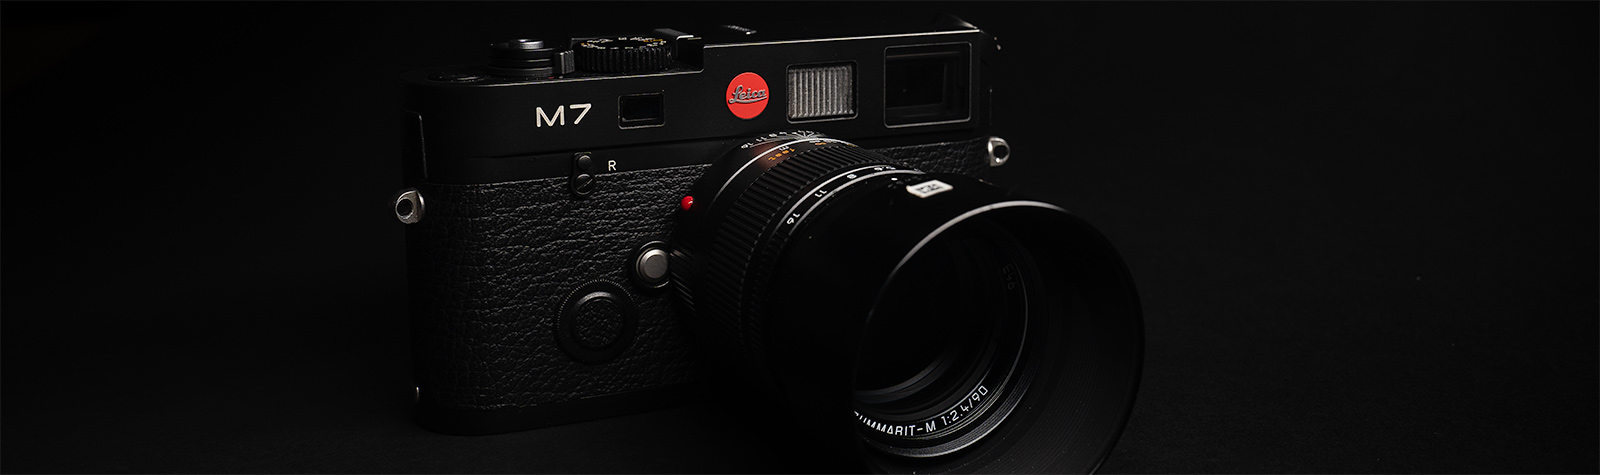 Leica 90mm Summarit f/2.4 Review